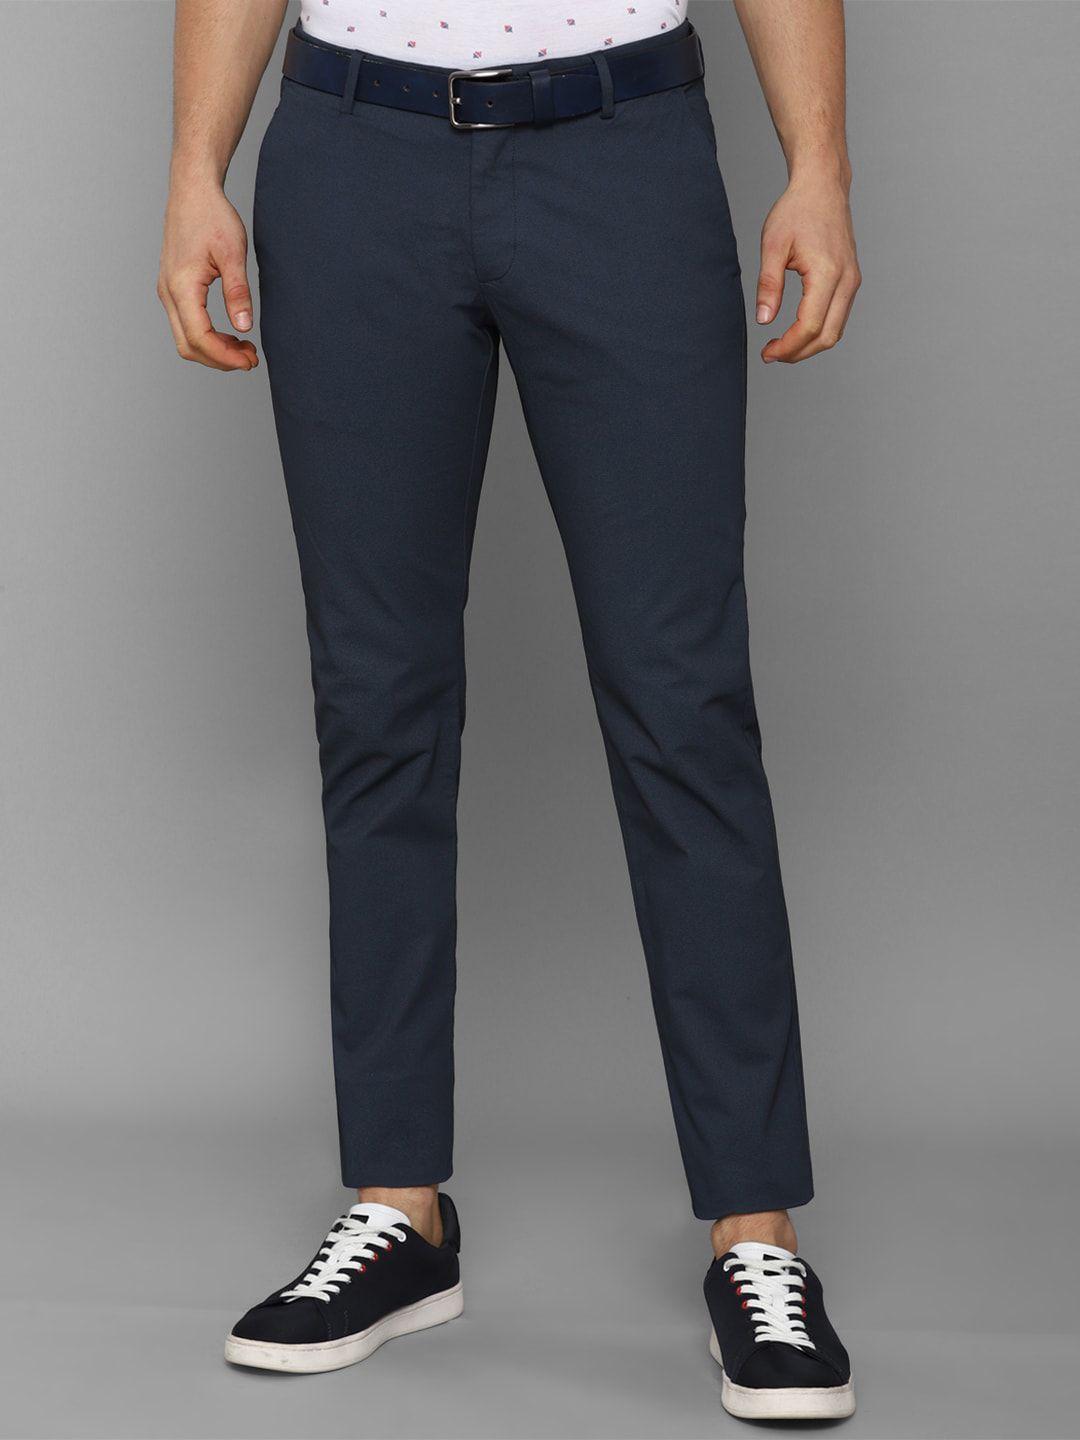 allen solly men navy blue textured slim fit trousers